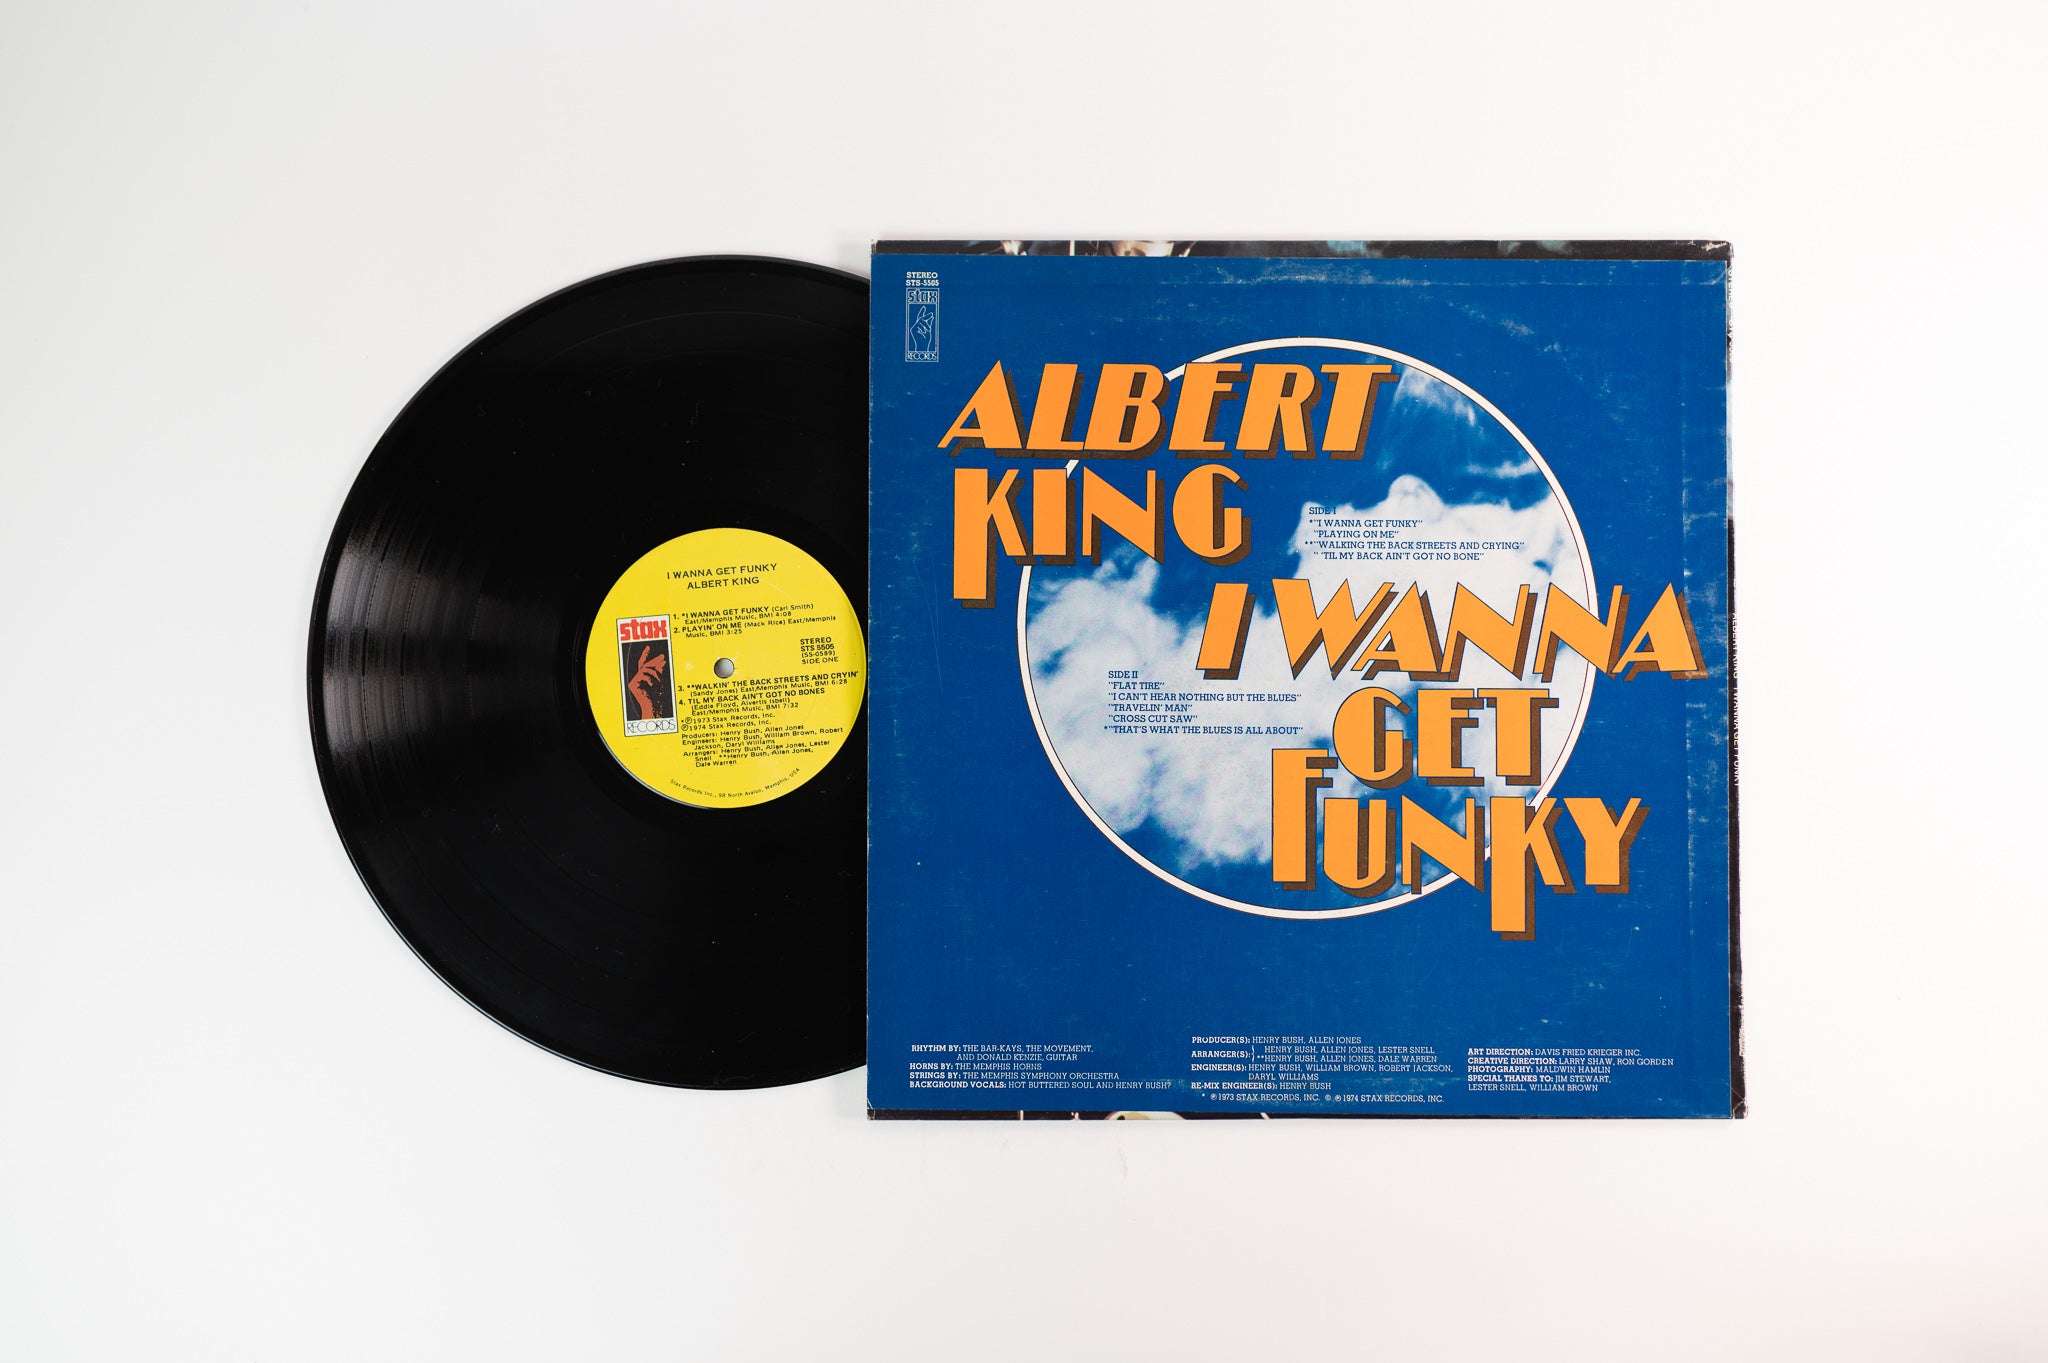 Albert King - I Wanna Get Funky on Stax